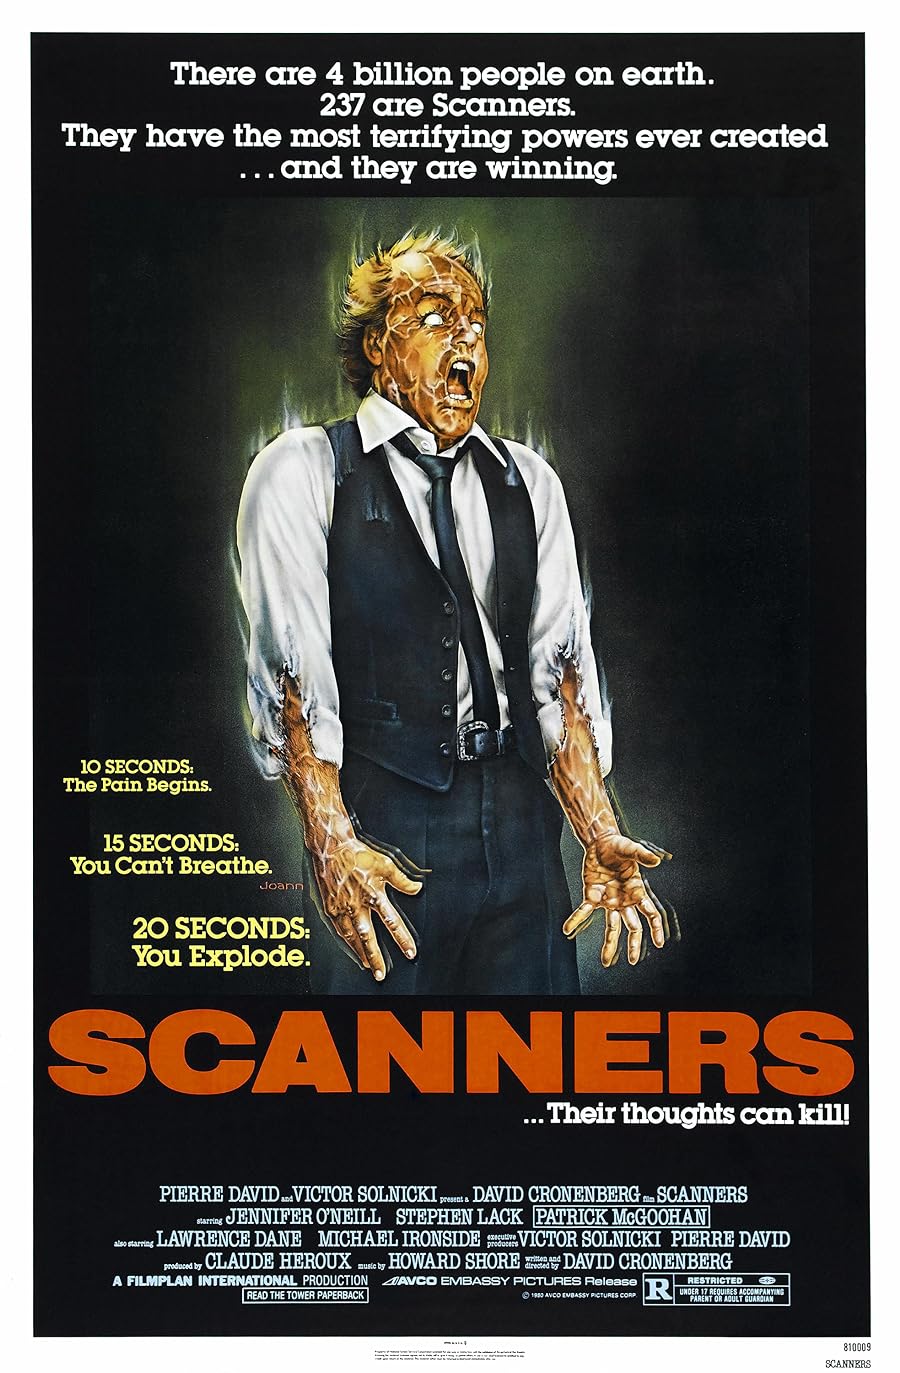 دانلود فیلم Scanners 1981